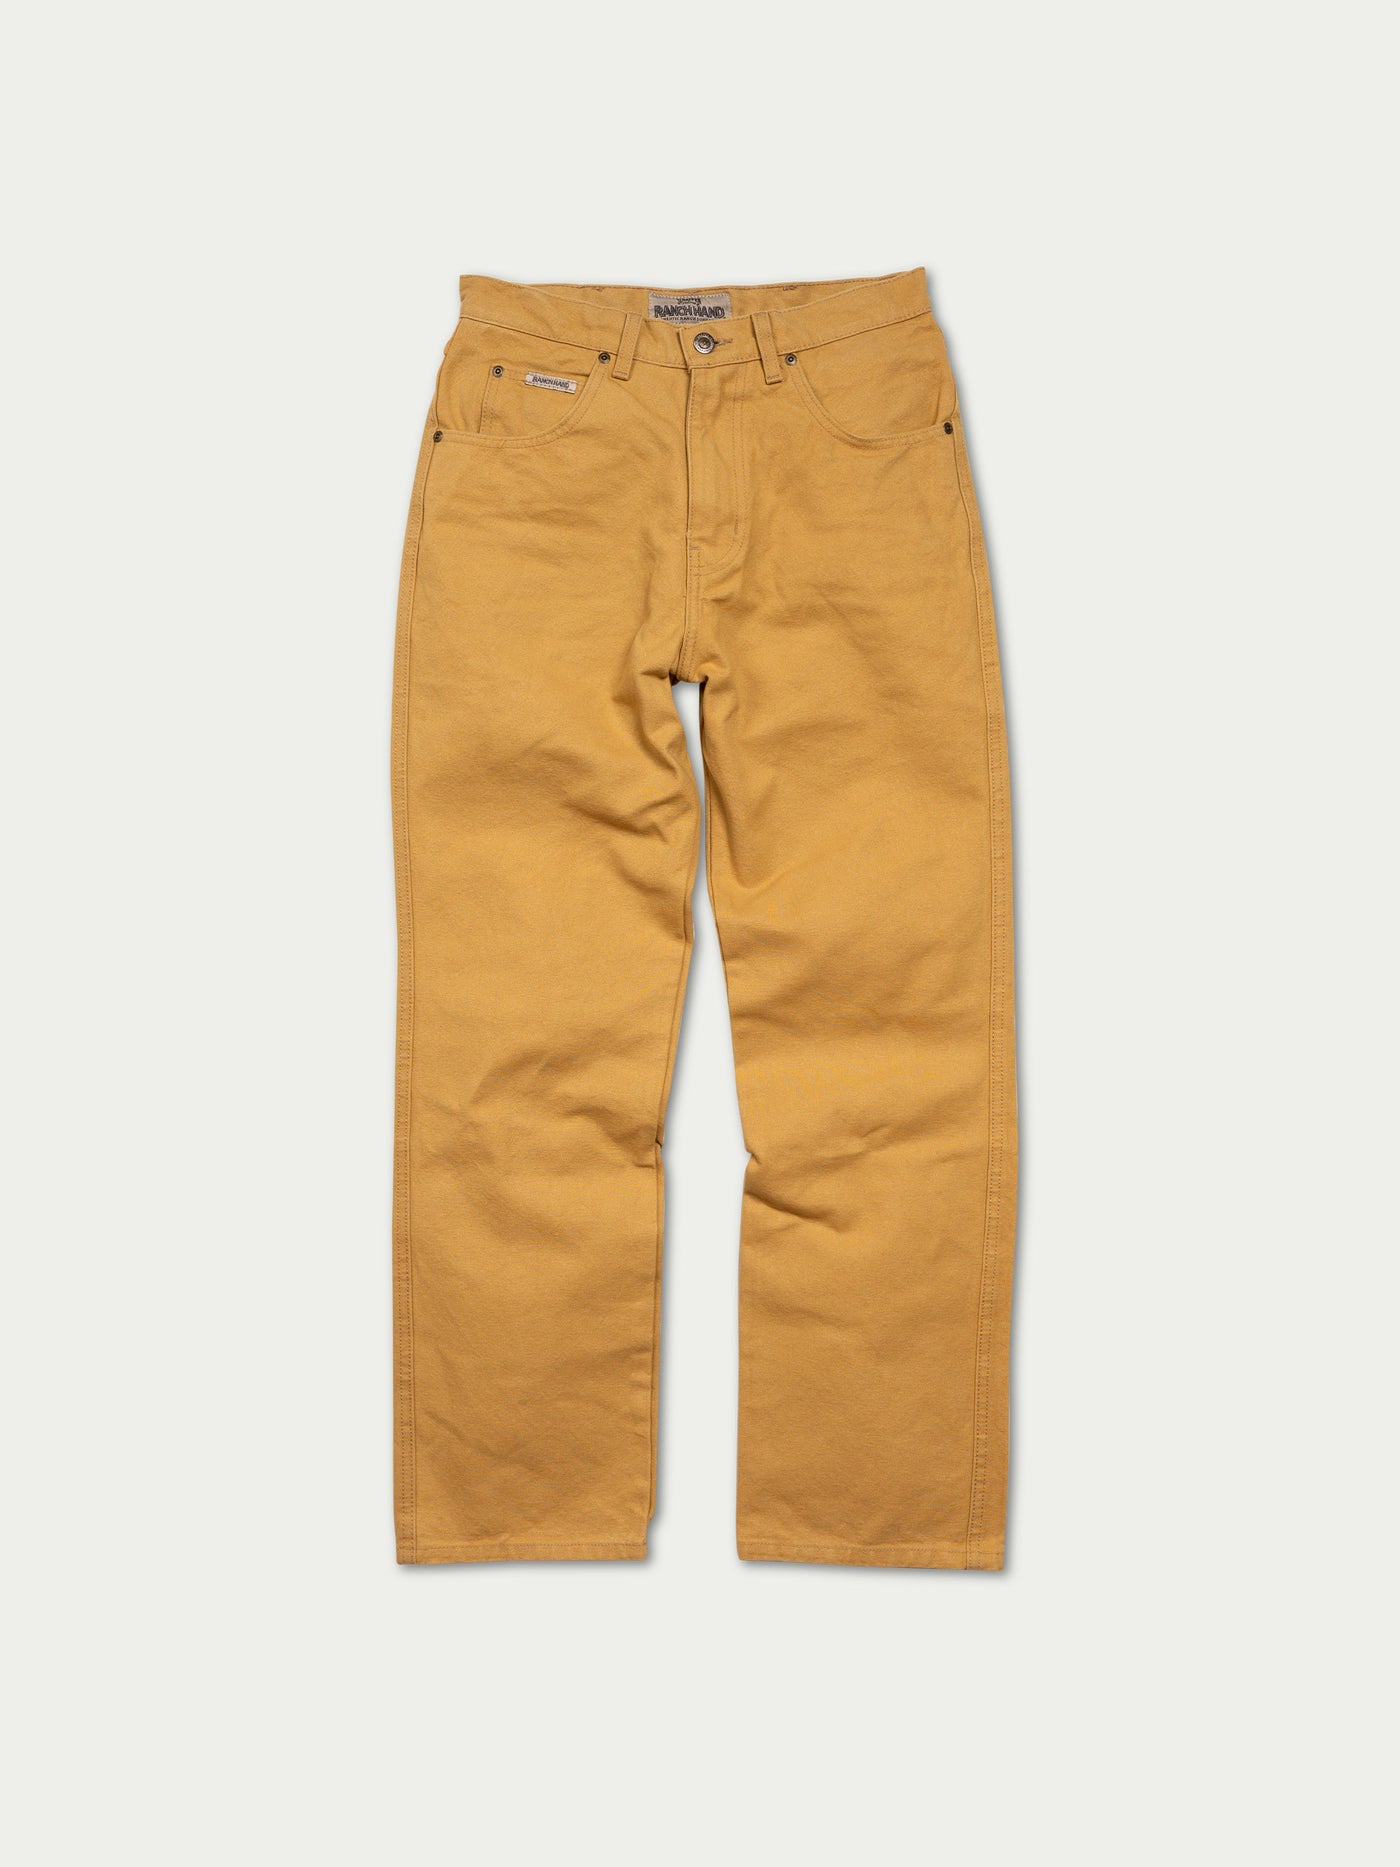 BrushclothÂ® RanchHand Jeans - Schaefer Outfitter